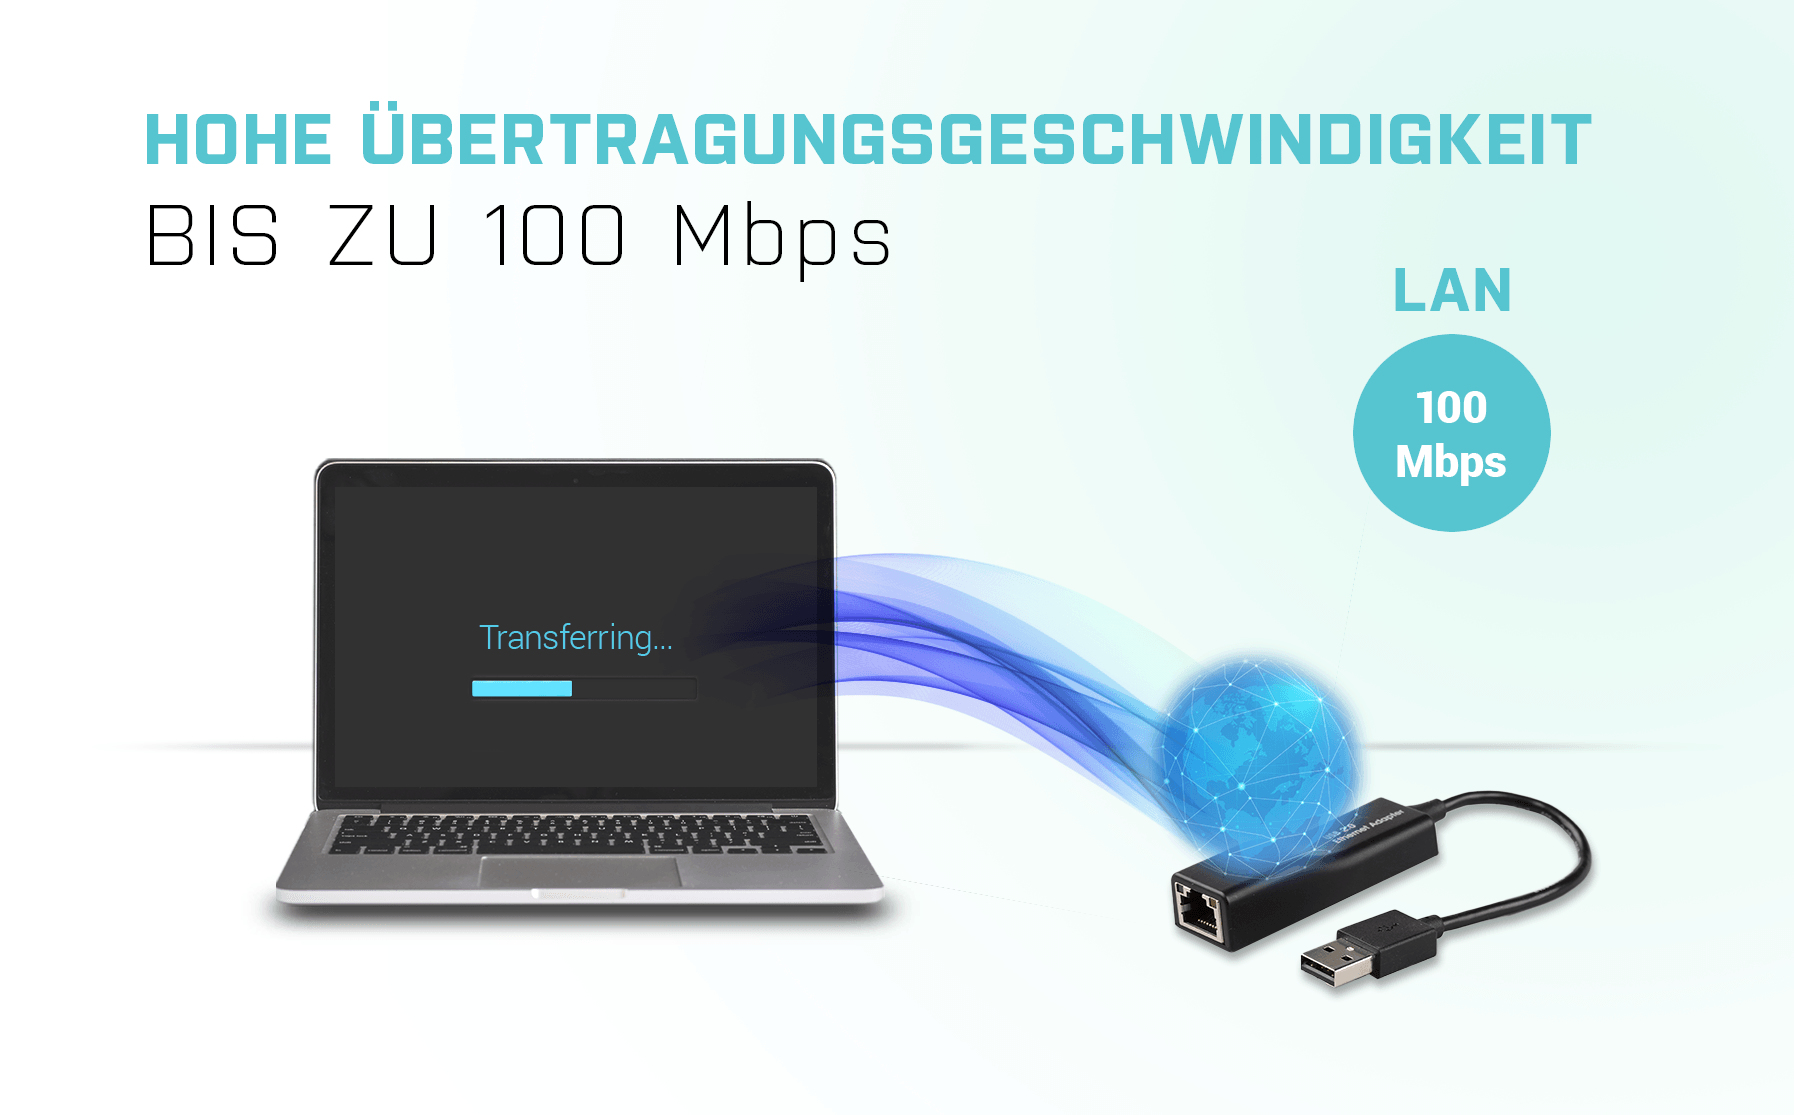 I-TEC USB 2.0 Advance 10/100 Fast Ethernet LAN Network Adapter USB 2.0 to RJ45 LED for Tablets Ultrabooks Notebooks